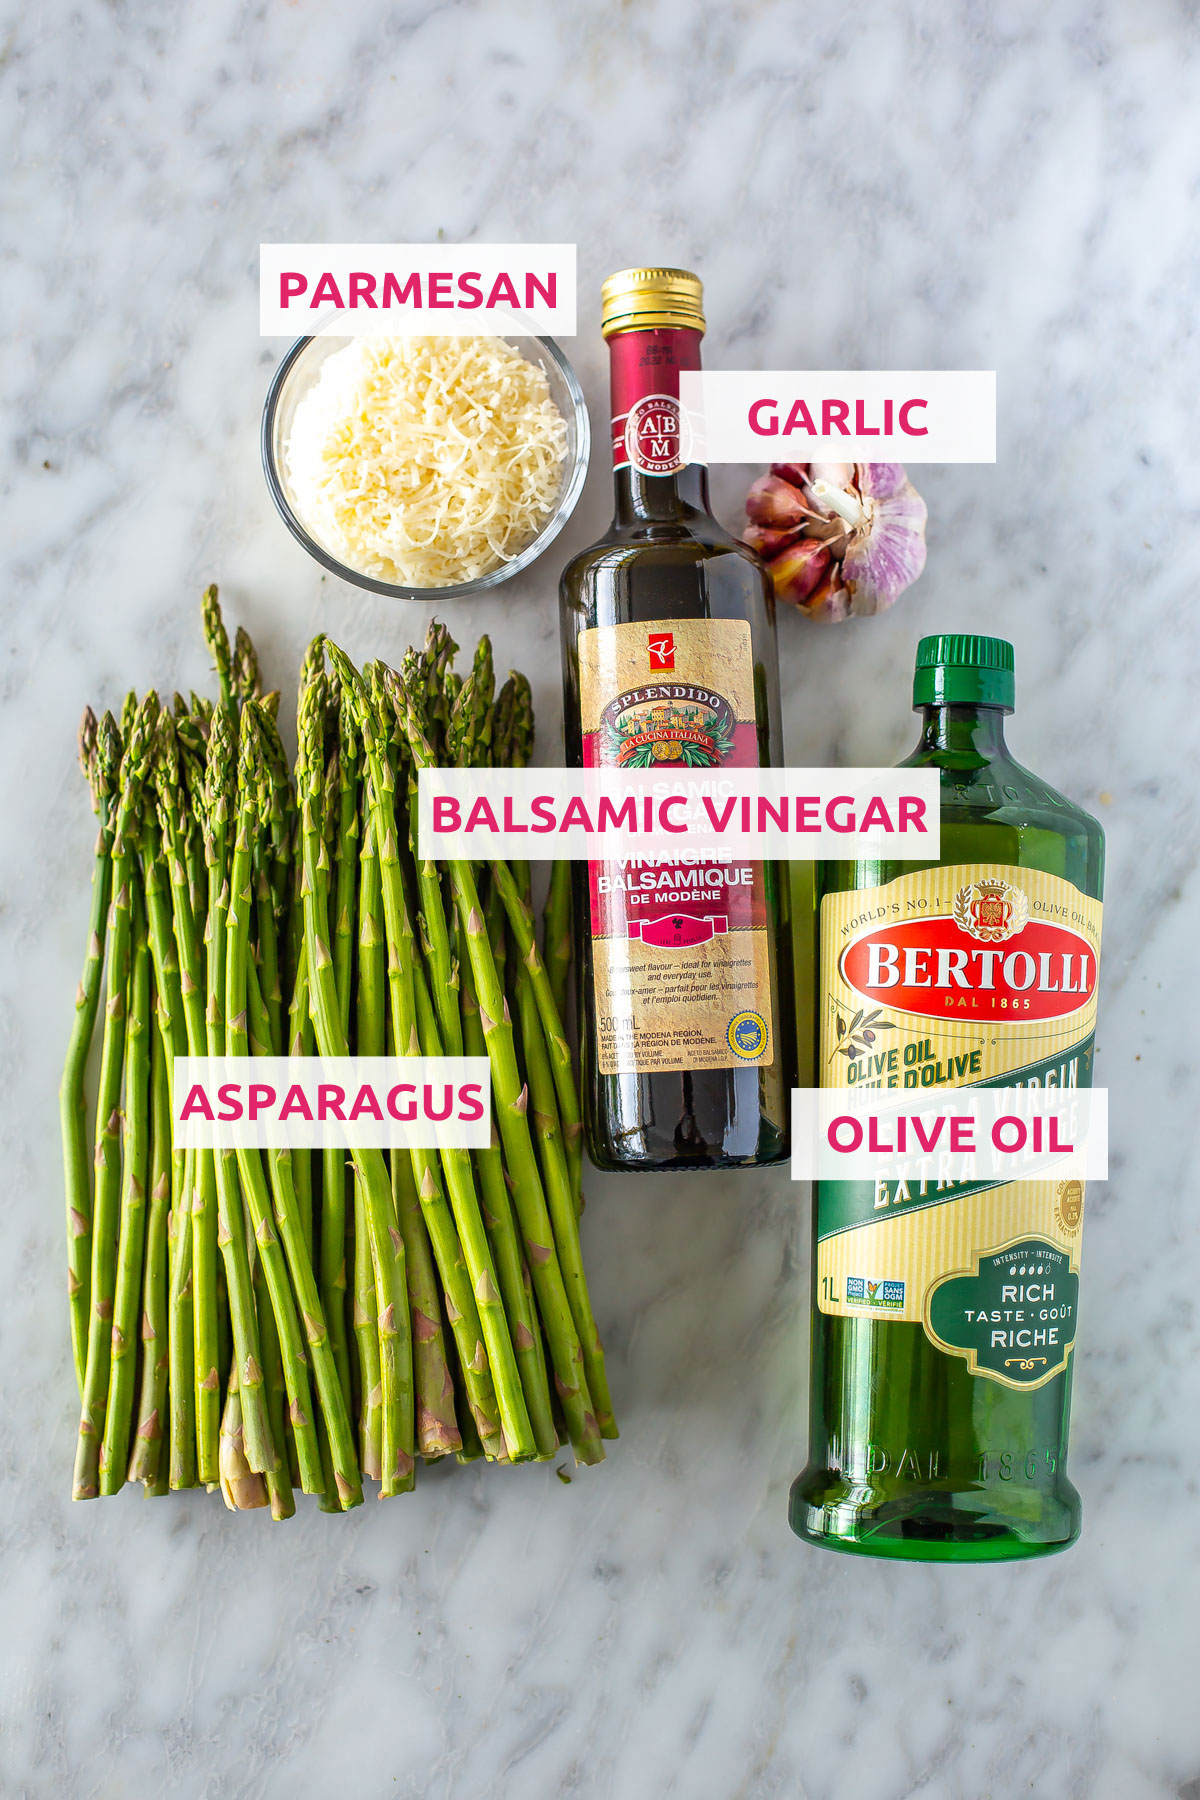 Ingredients for making air fryer asparagus: asparagus, olive oil, balsamic vinegar, parmesan and garlic.